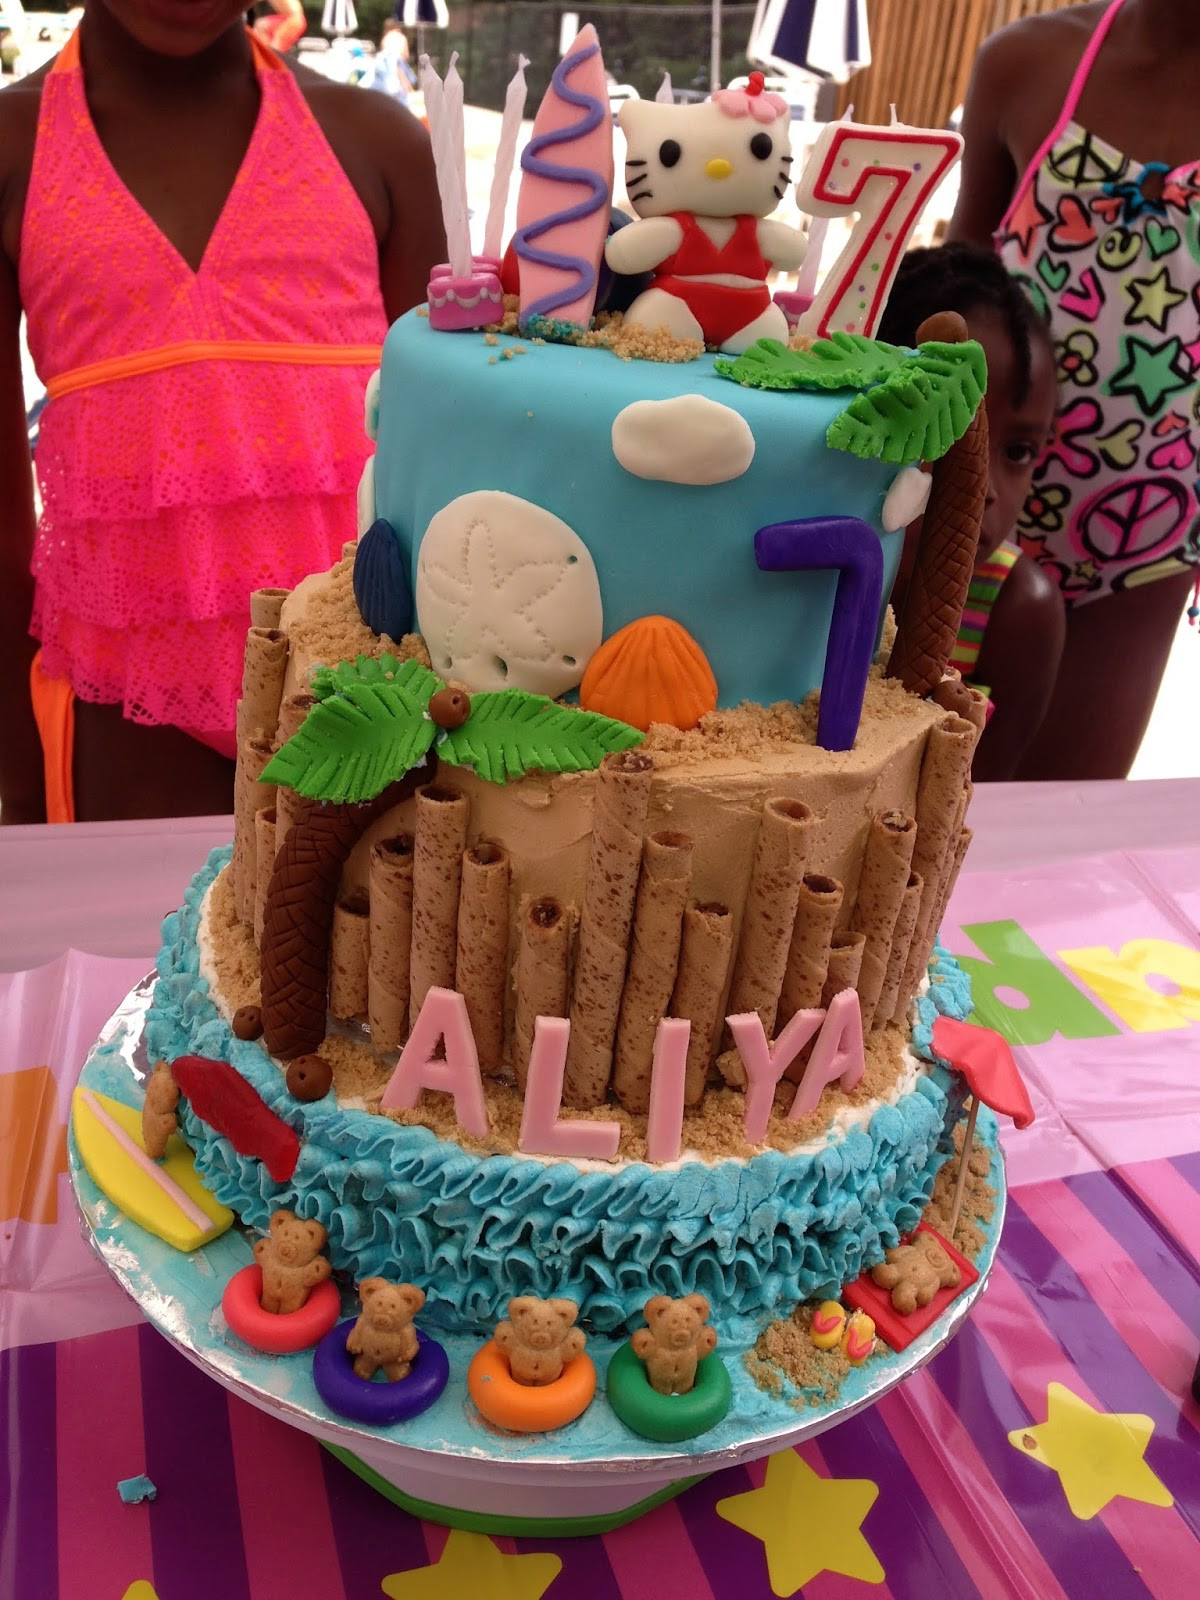 Best ideas about Hawaiian Birthday Cake
. Save or Pin Joyce Gourmet Hello Kitty Luau Birthday Cake Now.